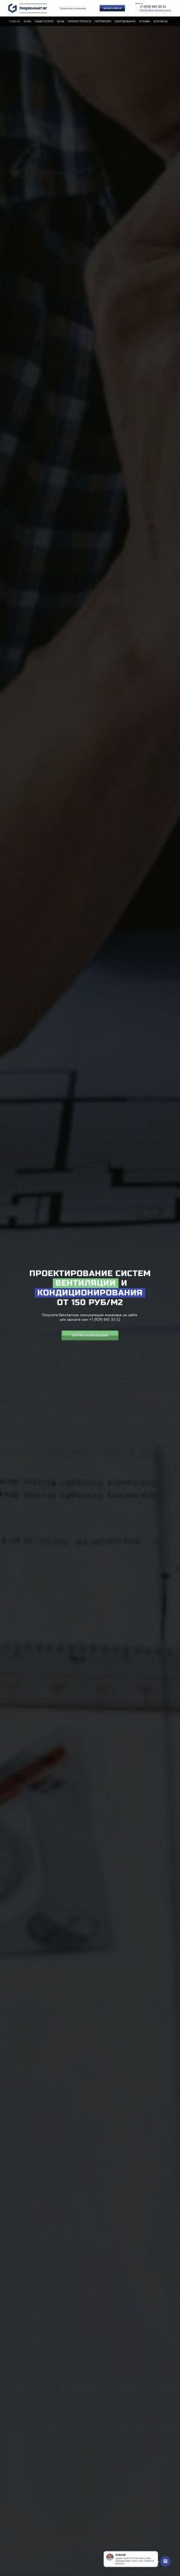 Предпросмотр для mikro-klimat-yug.ru — Микроклимат-ЮГ